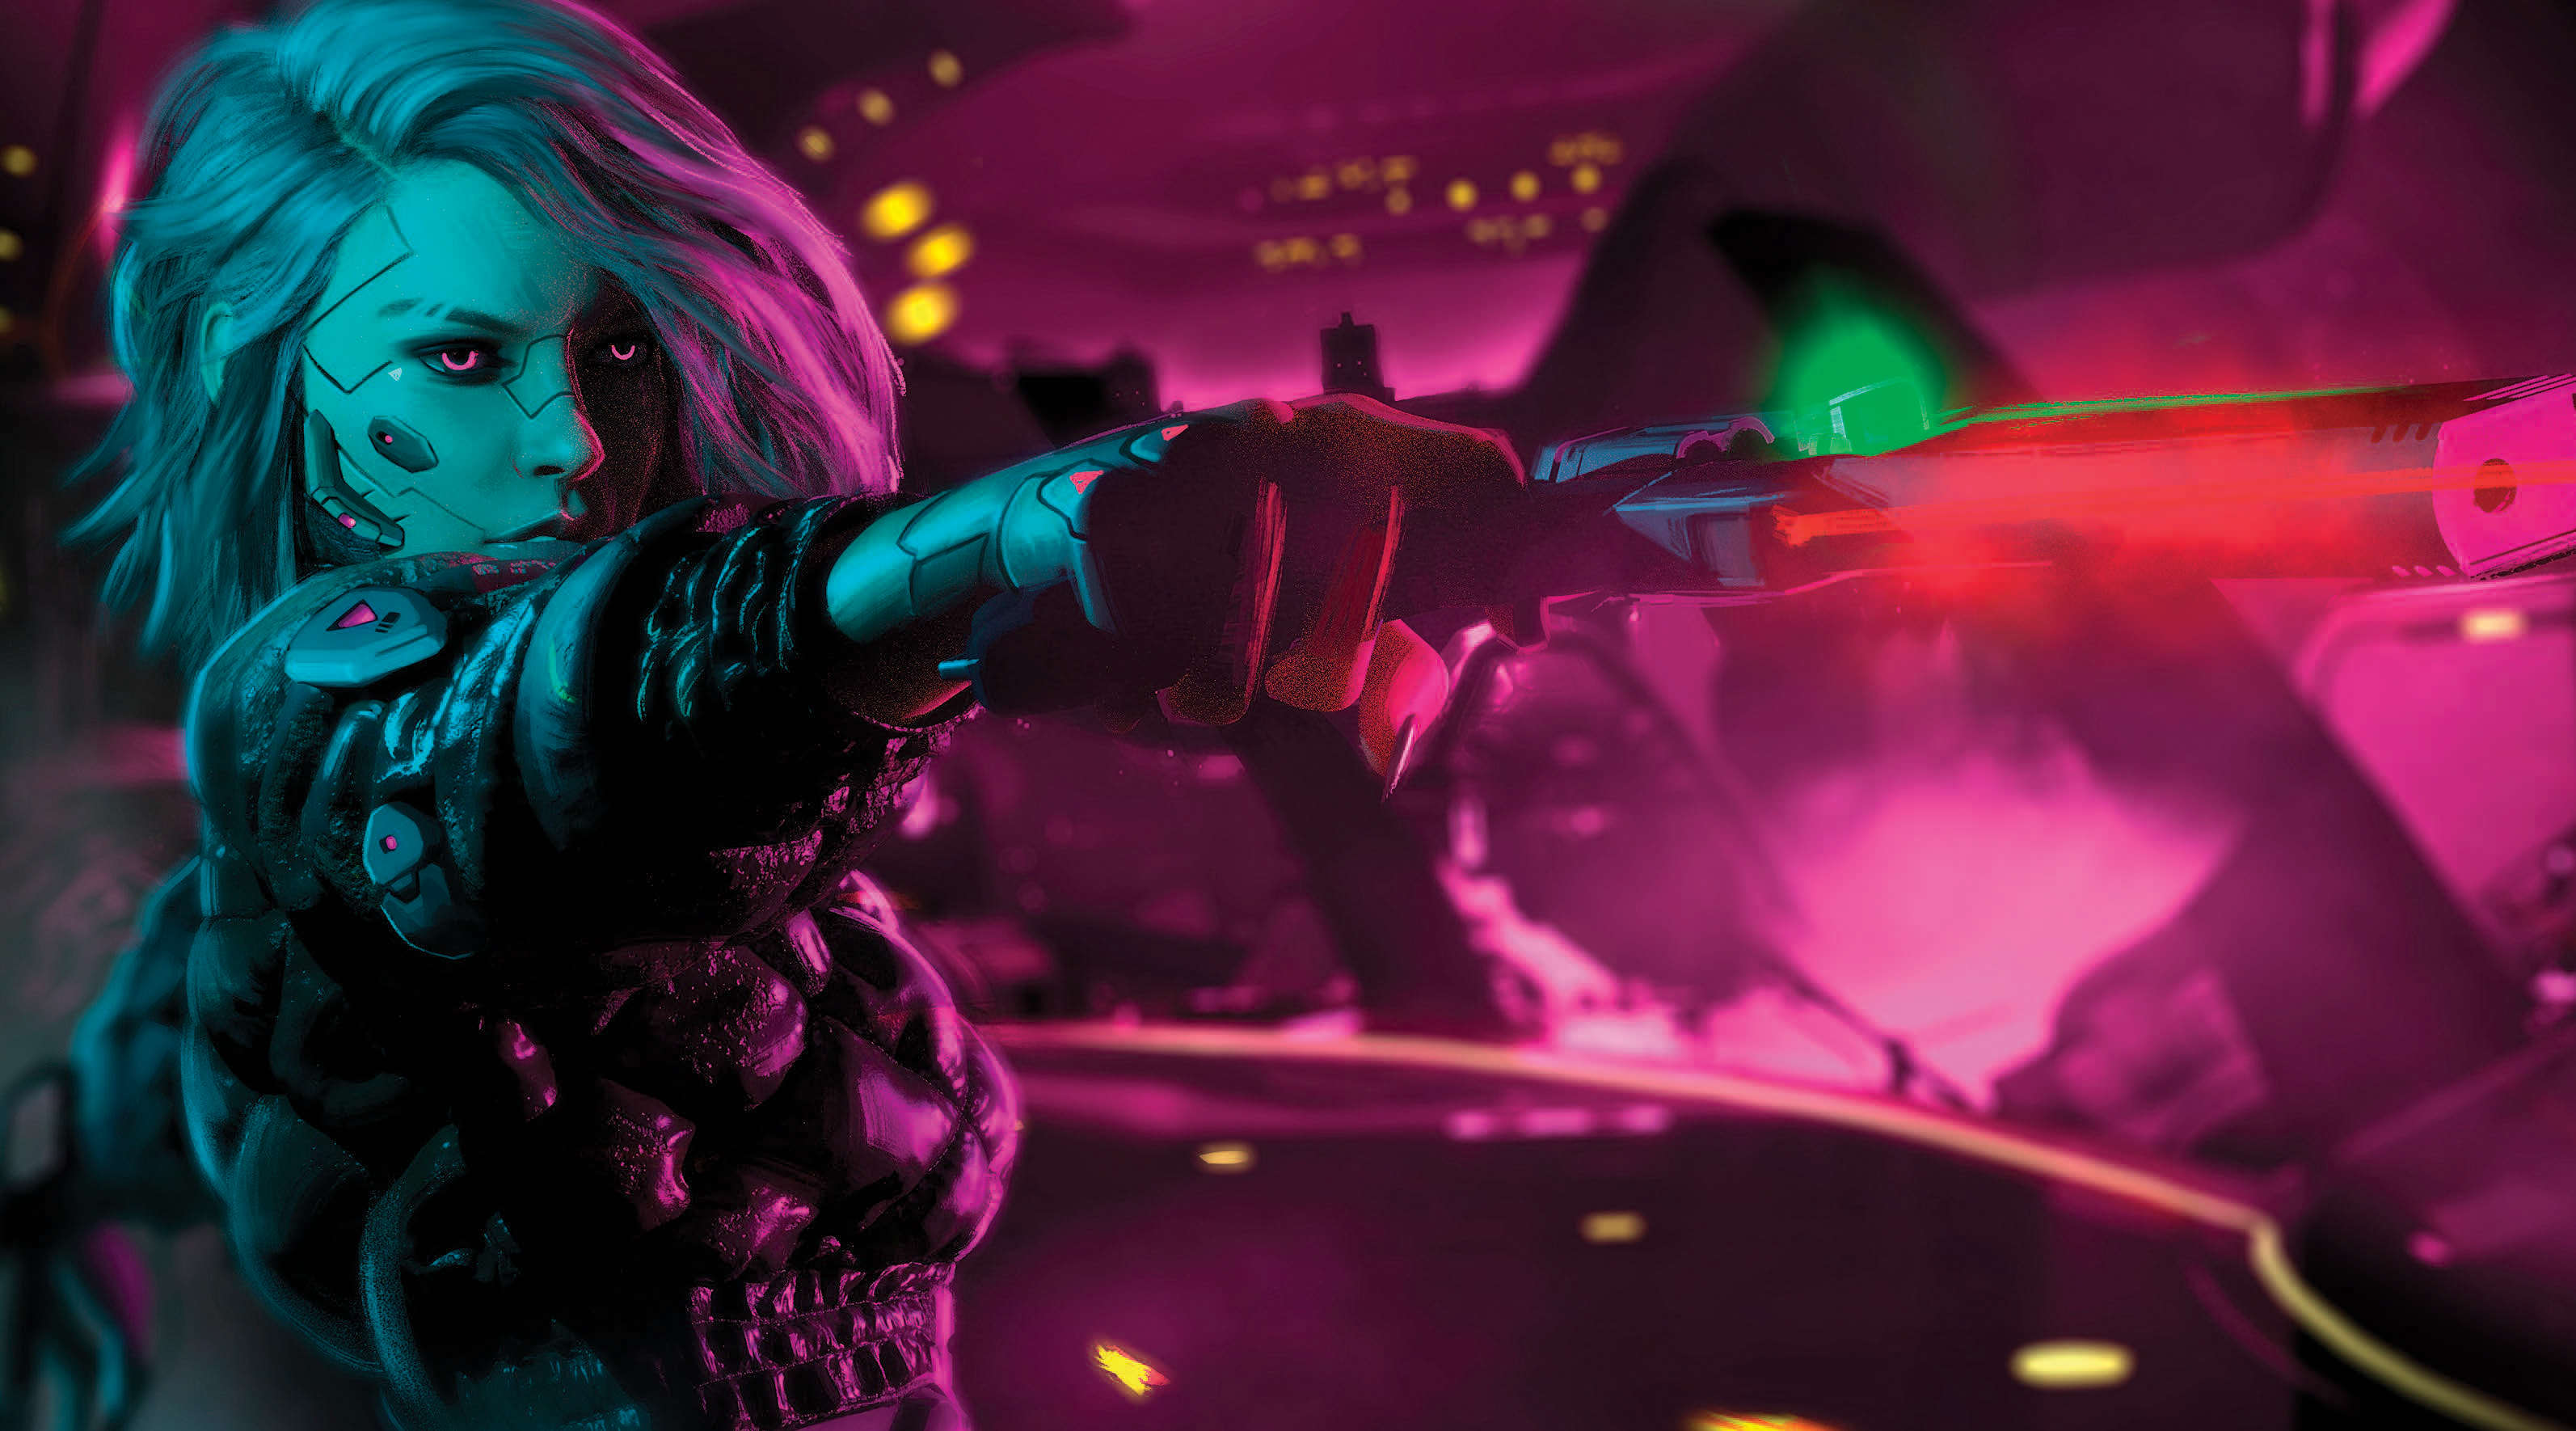 An edgerunner wearing light armorjack points their gun at a target. All against a neon backdrop.